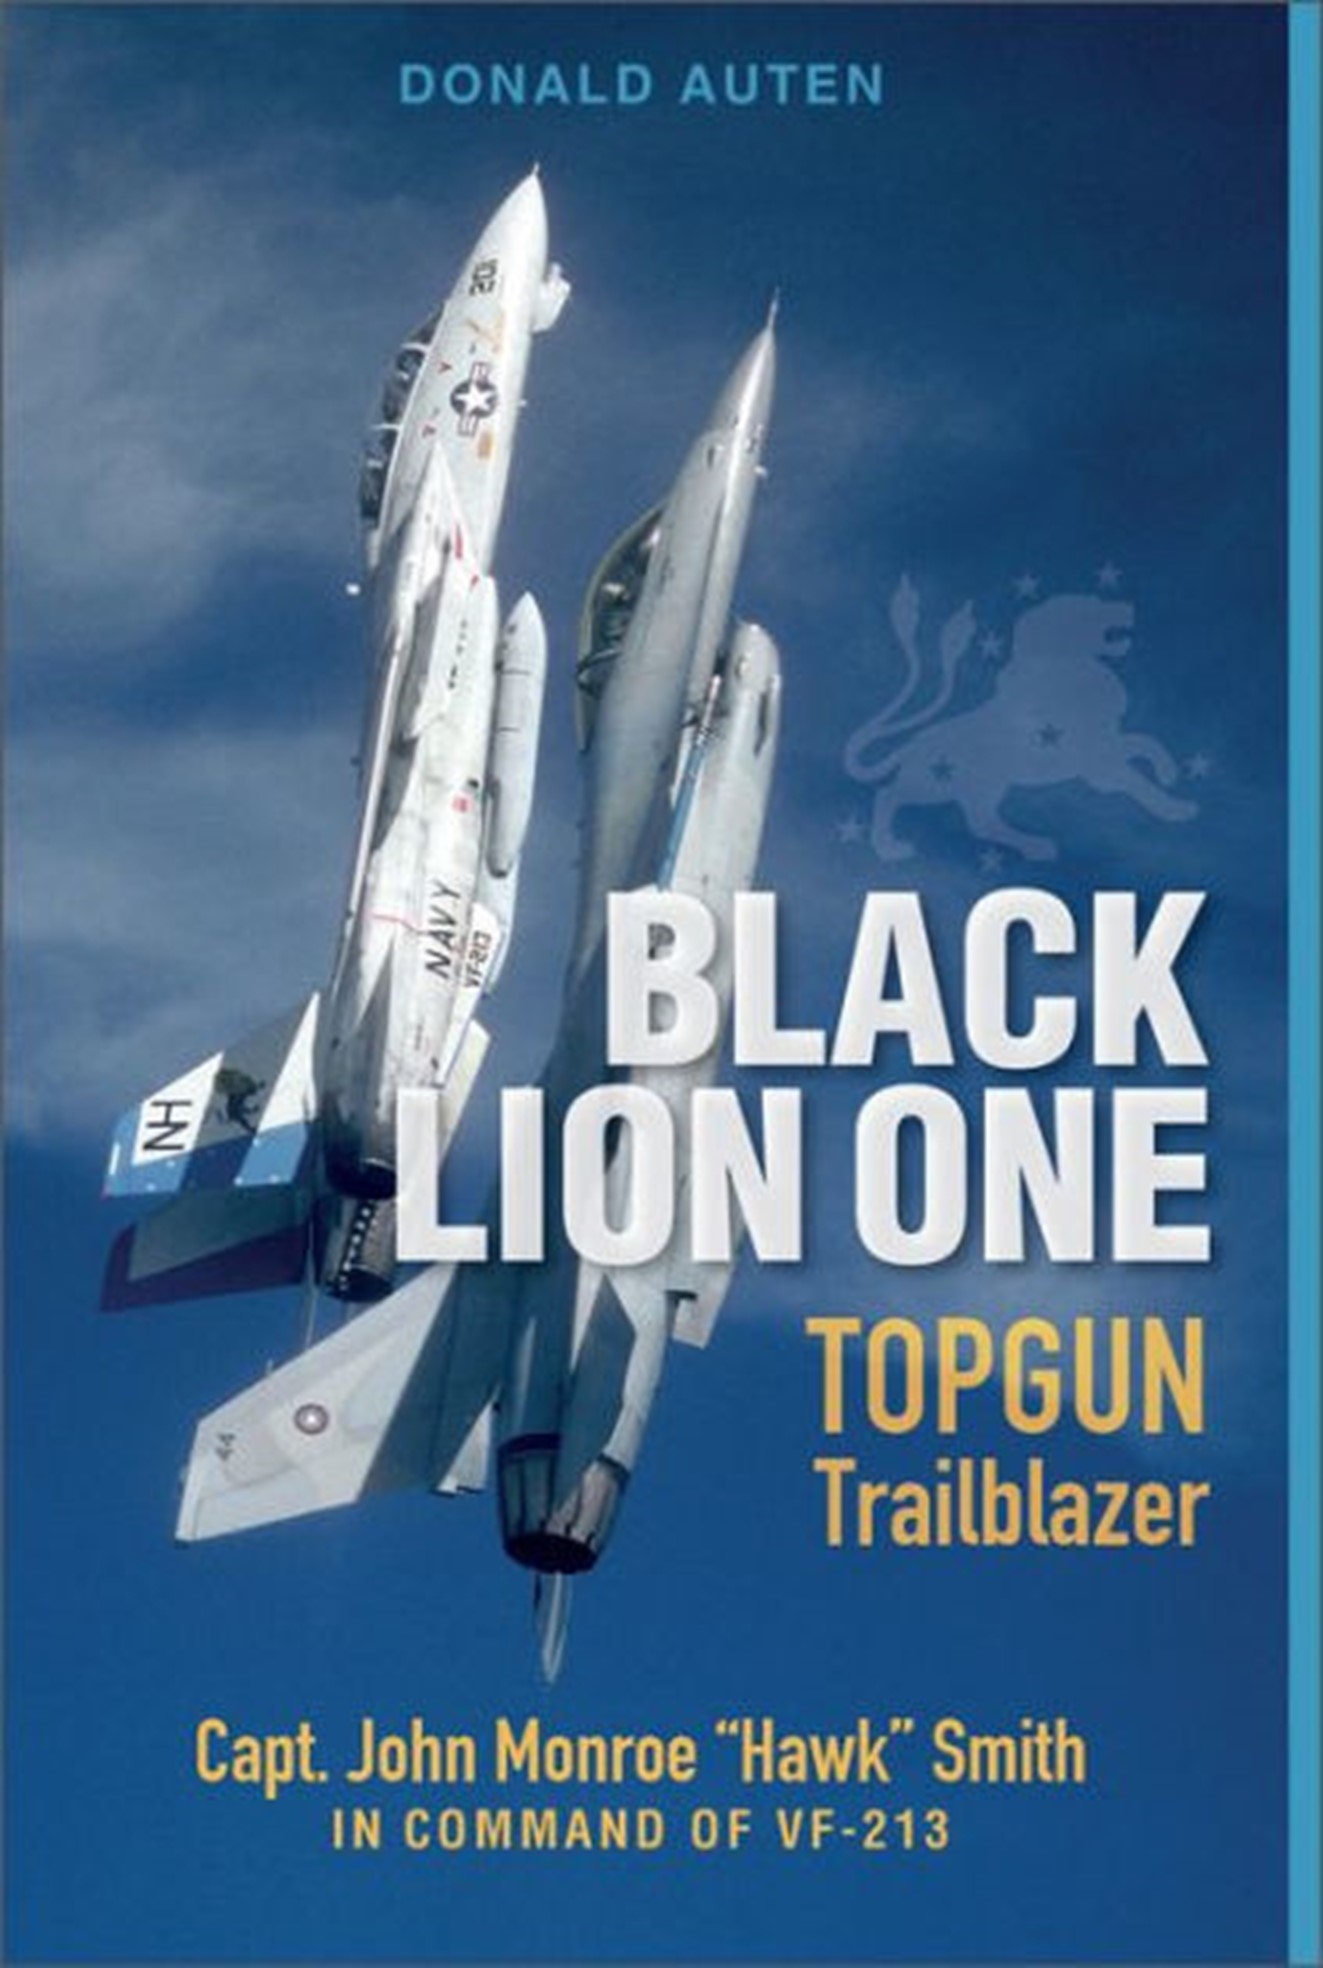 Black Lion One: TOPGUN Trailblazer Capt. John Monroe “Hawk” Smith in Command of VF-213